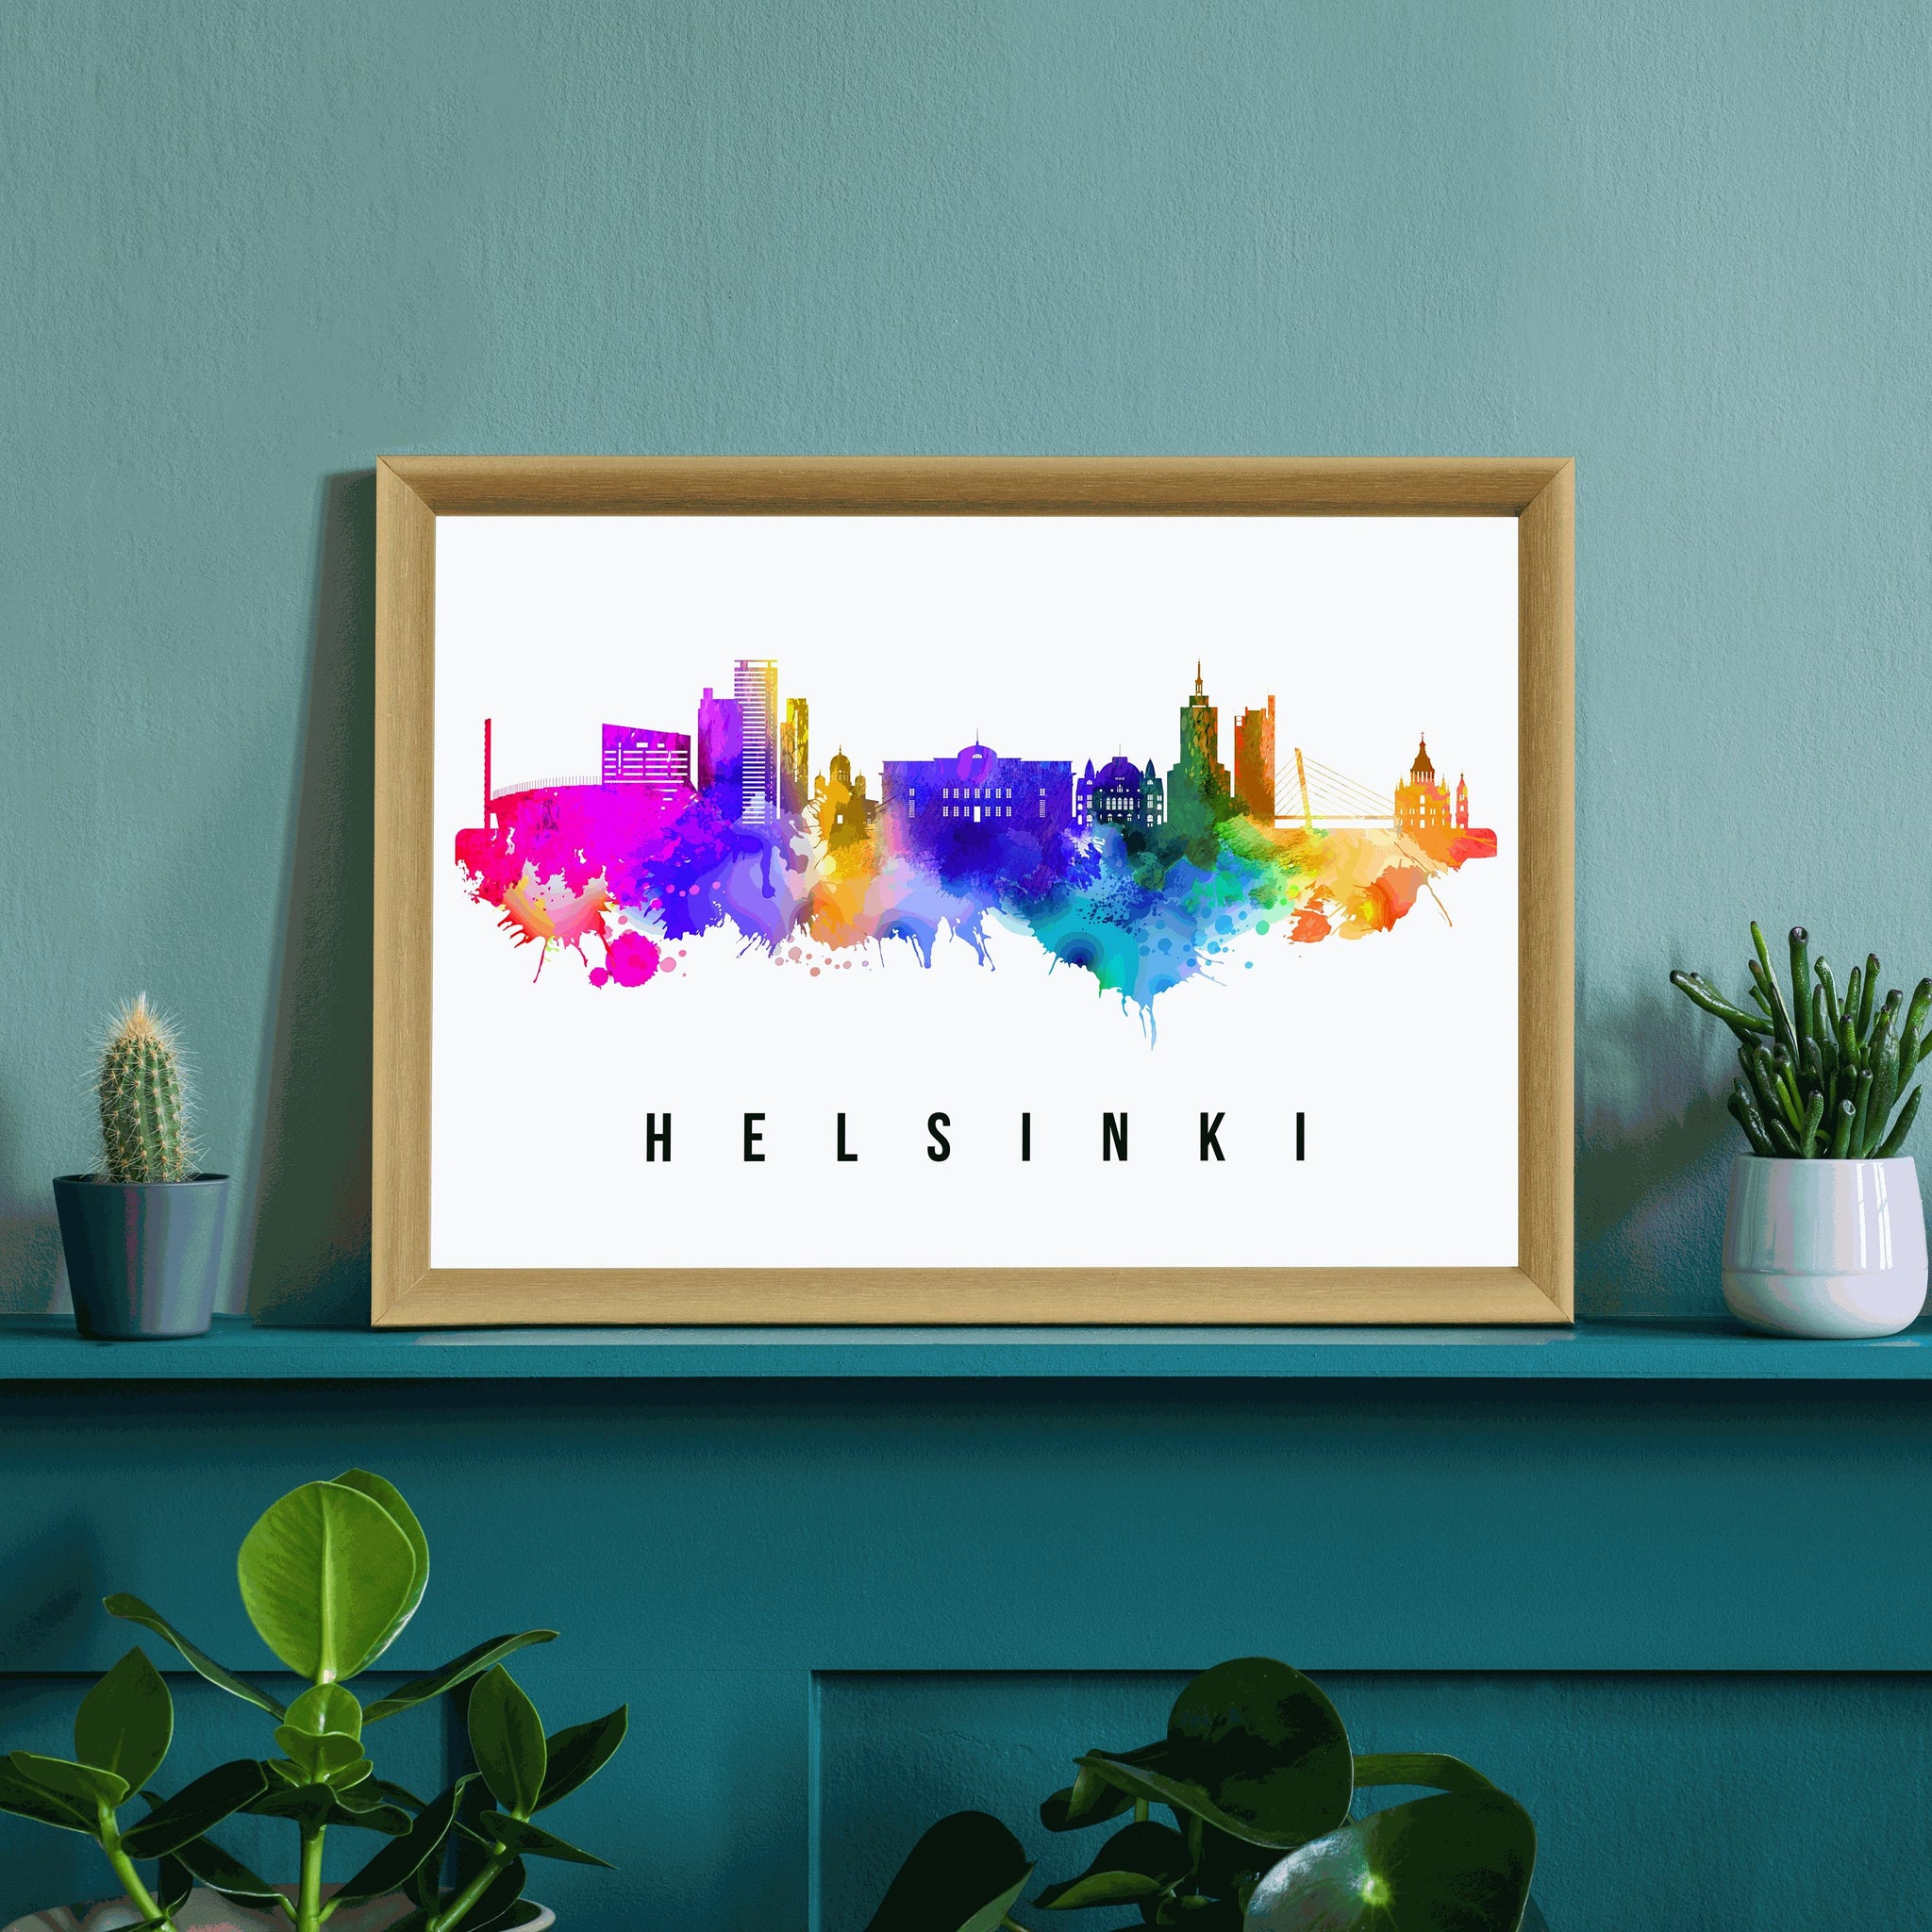 HELSINKI - FILAND Poster, Skyline Poster Cityscape and Landmark Helsinki City Illustration Home Wall Art, Office Decor